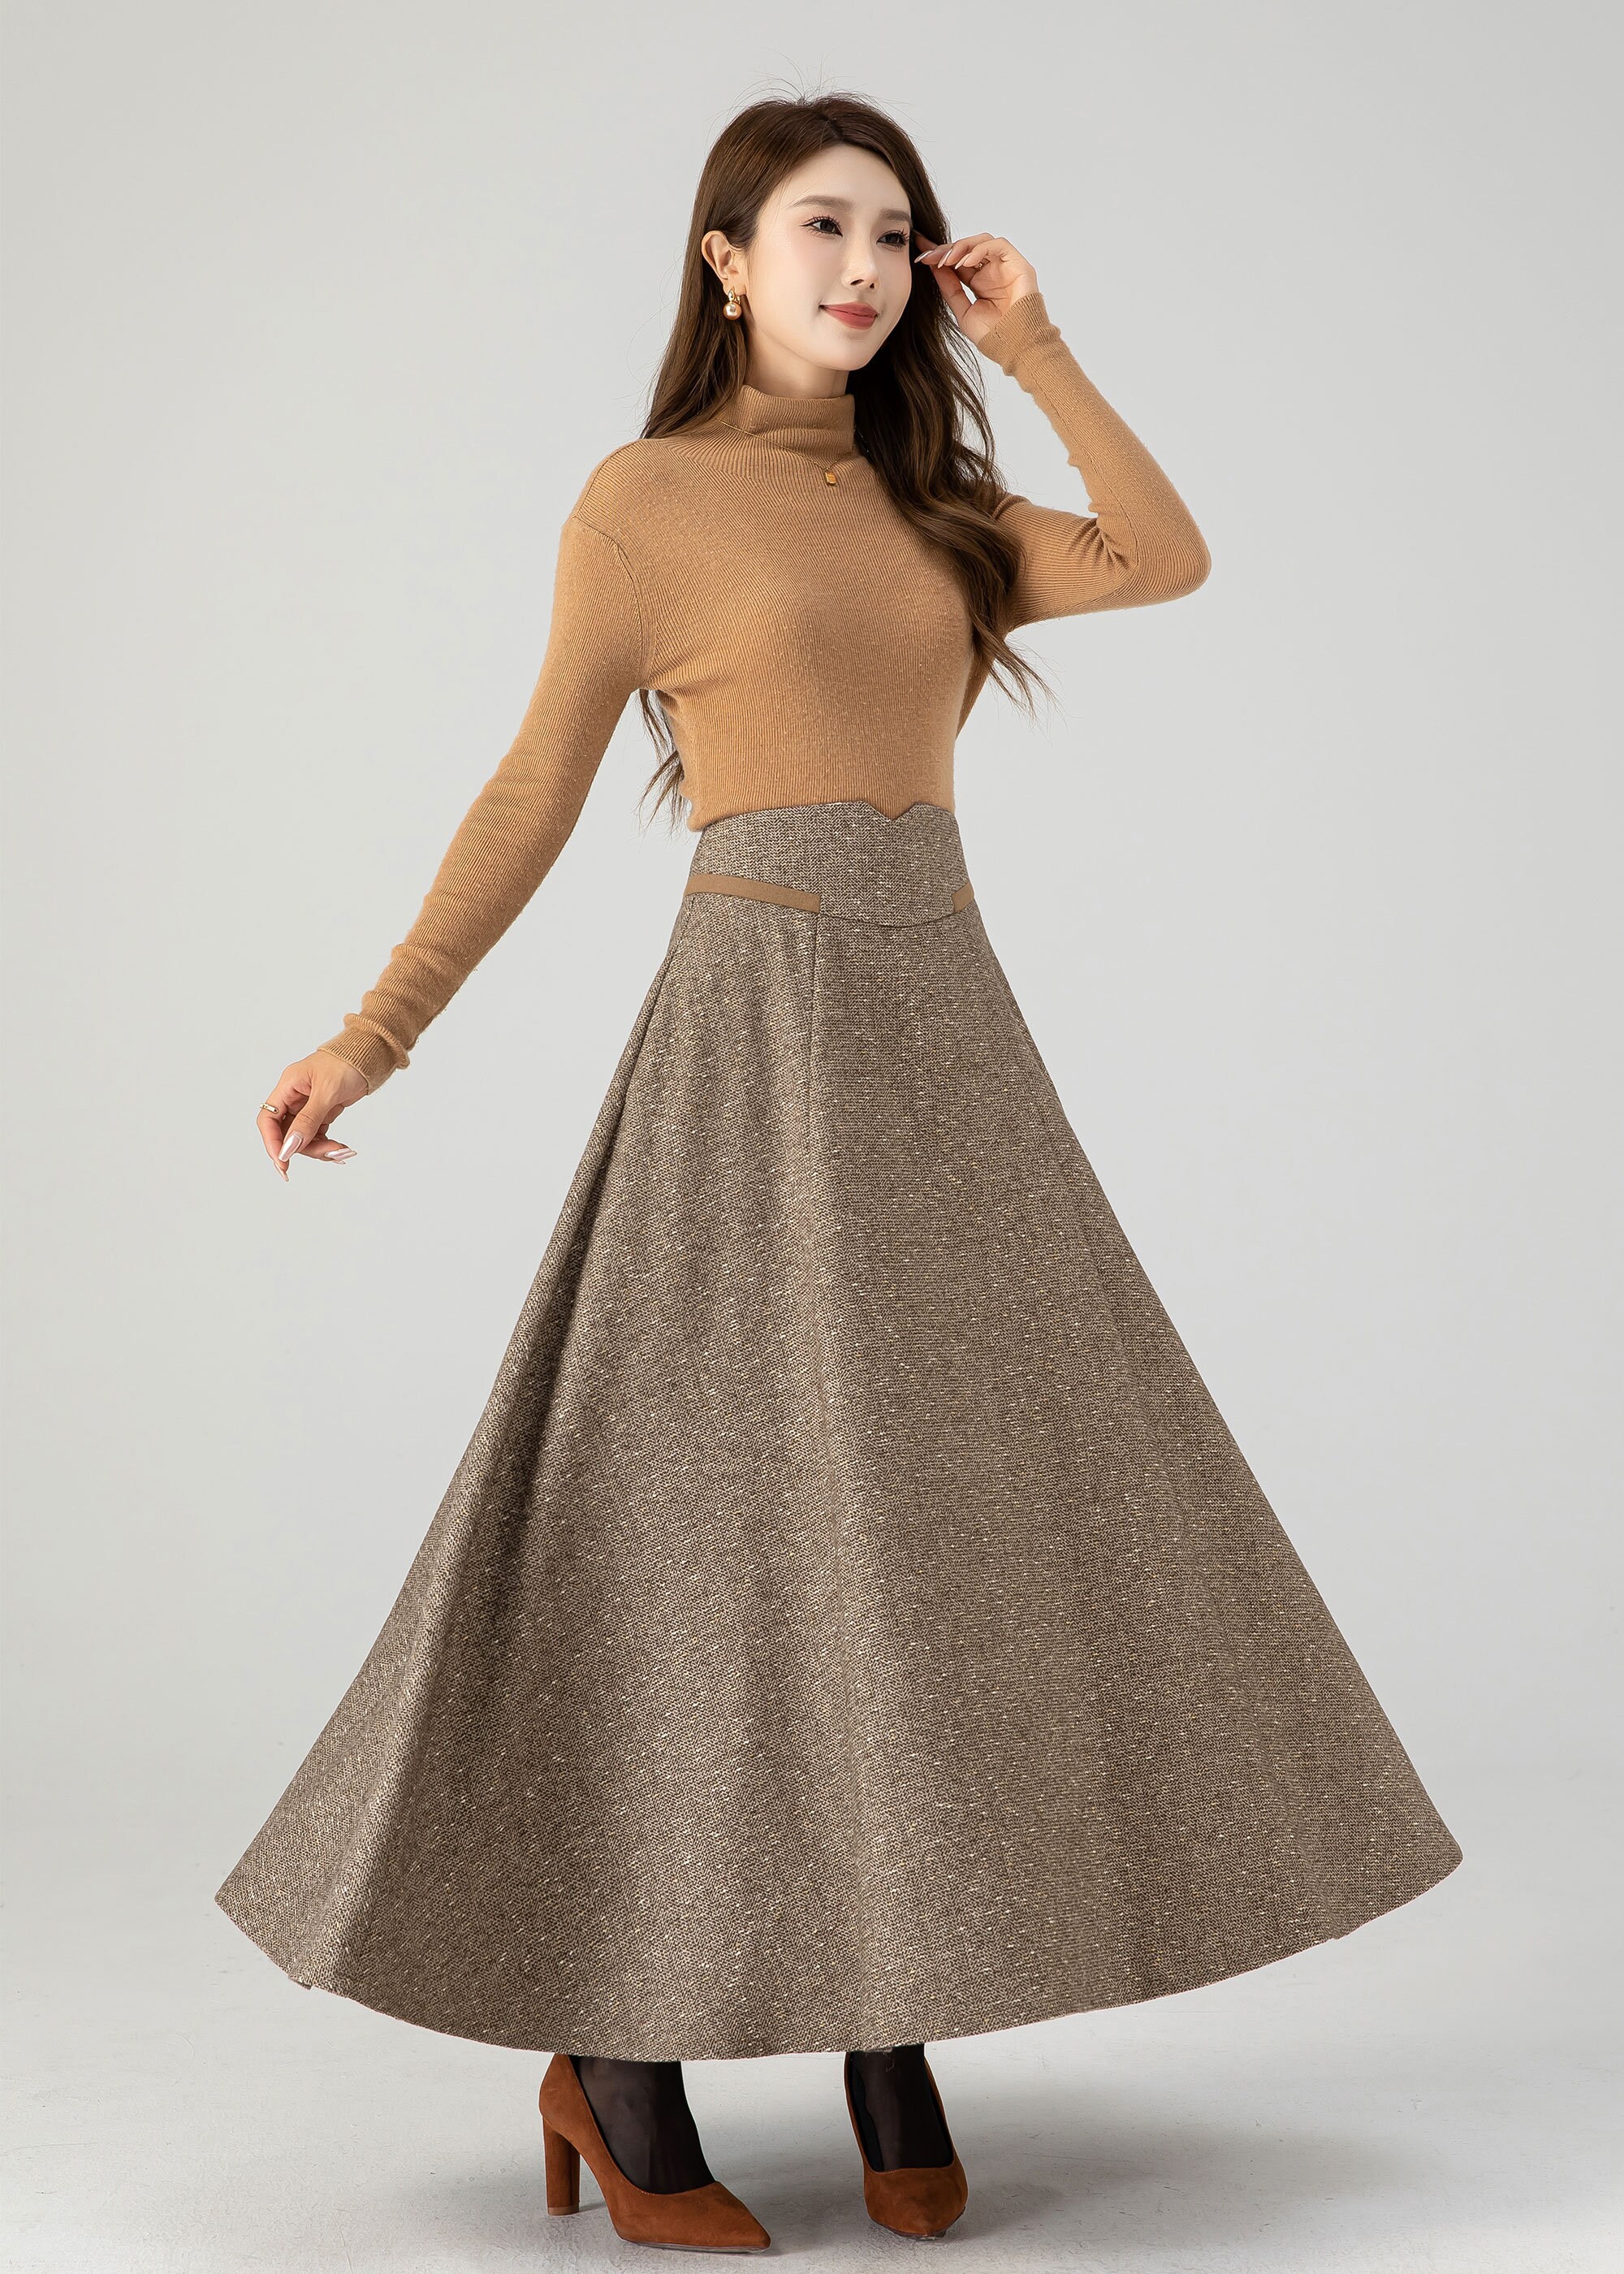  Ylingjun Warm Long Wool Skirt for Women Winter Fall